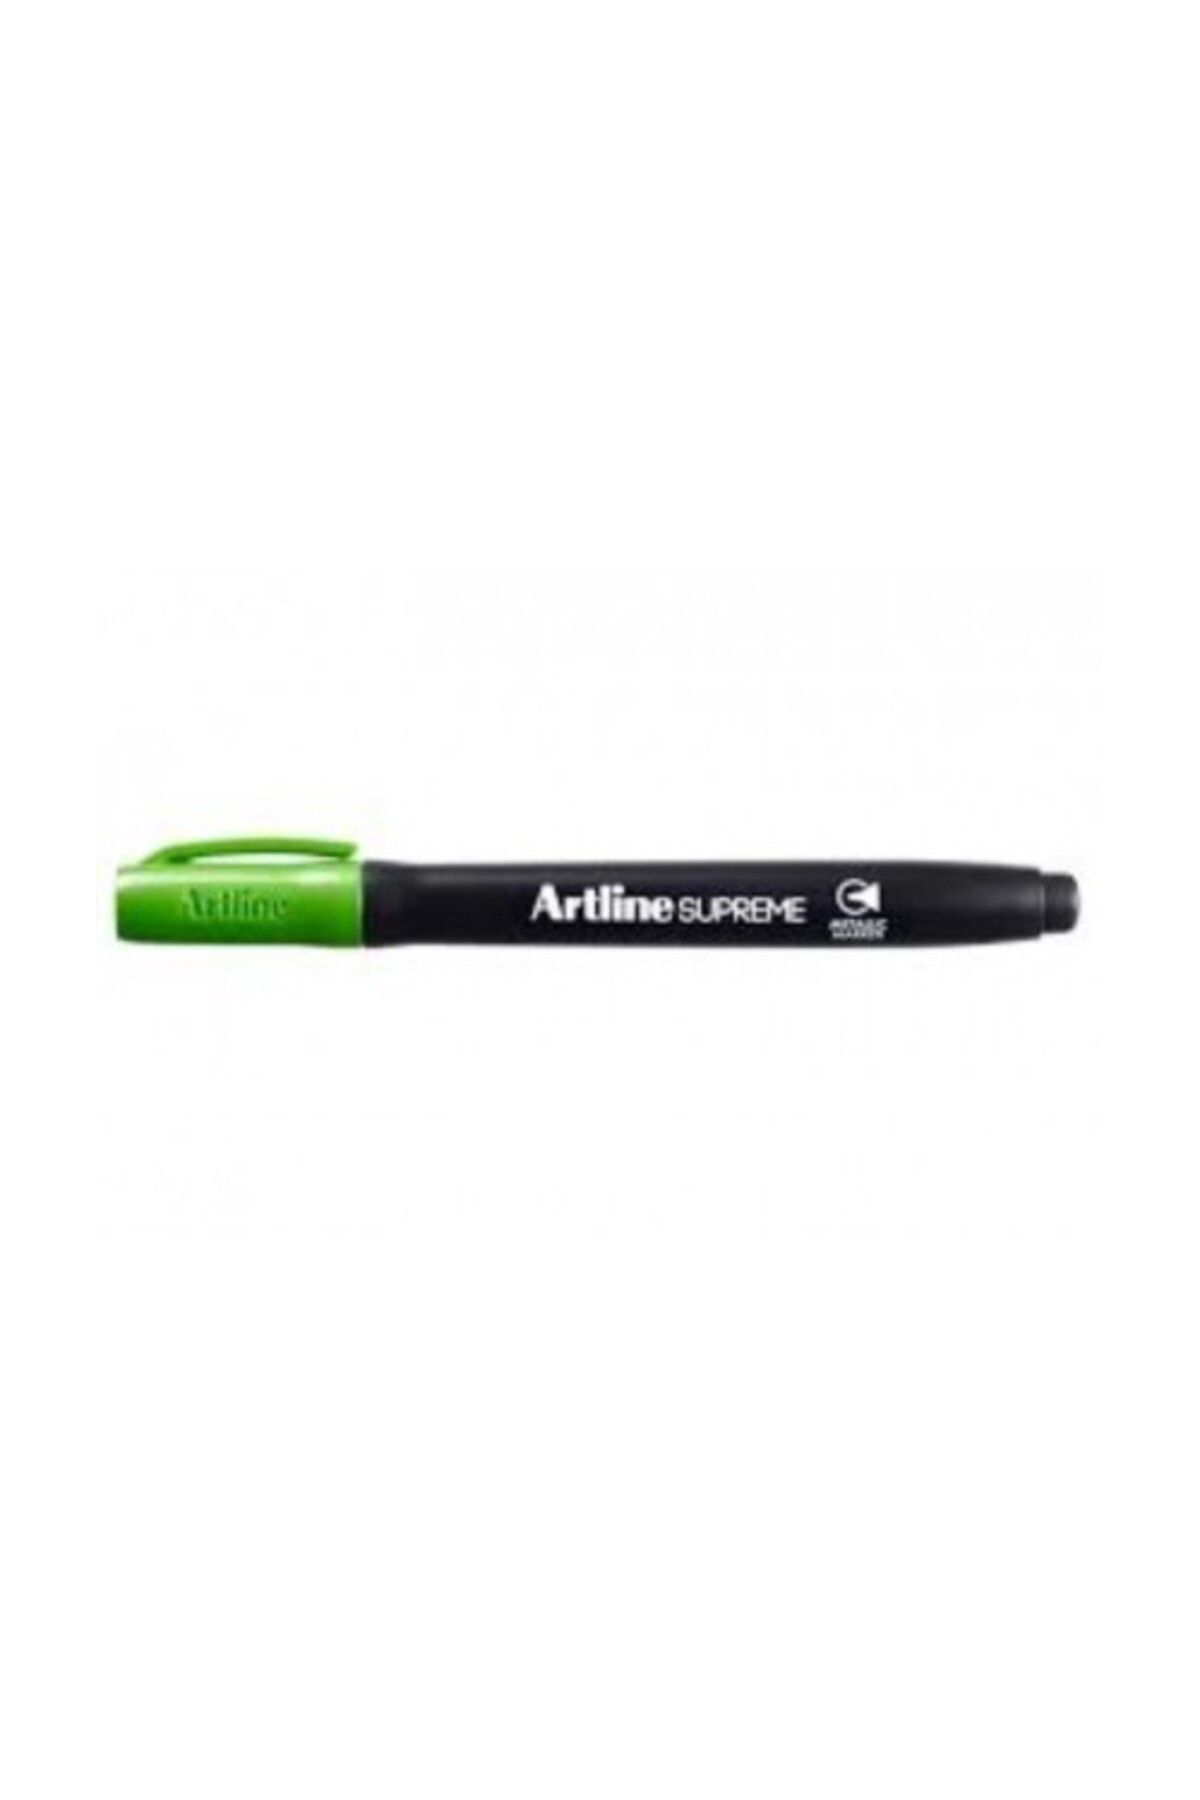 artline Supreme Metalik Marker 790 Yeşil